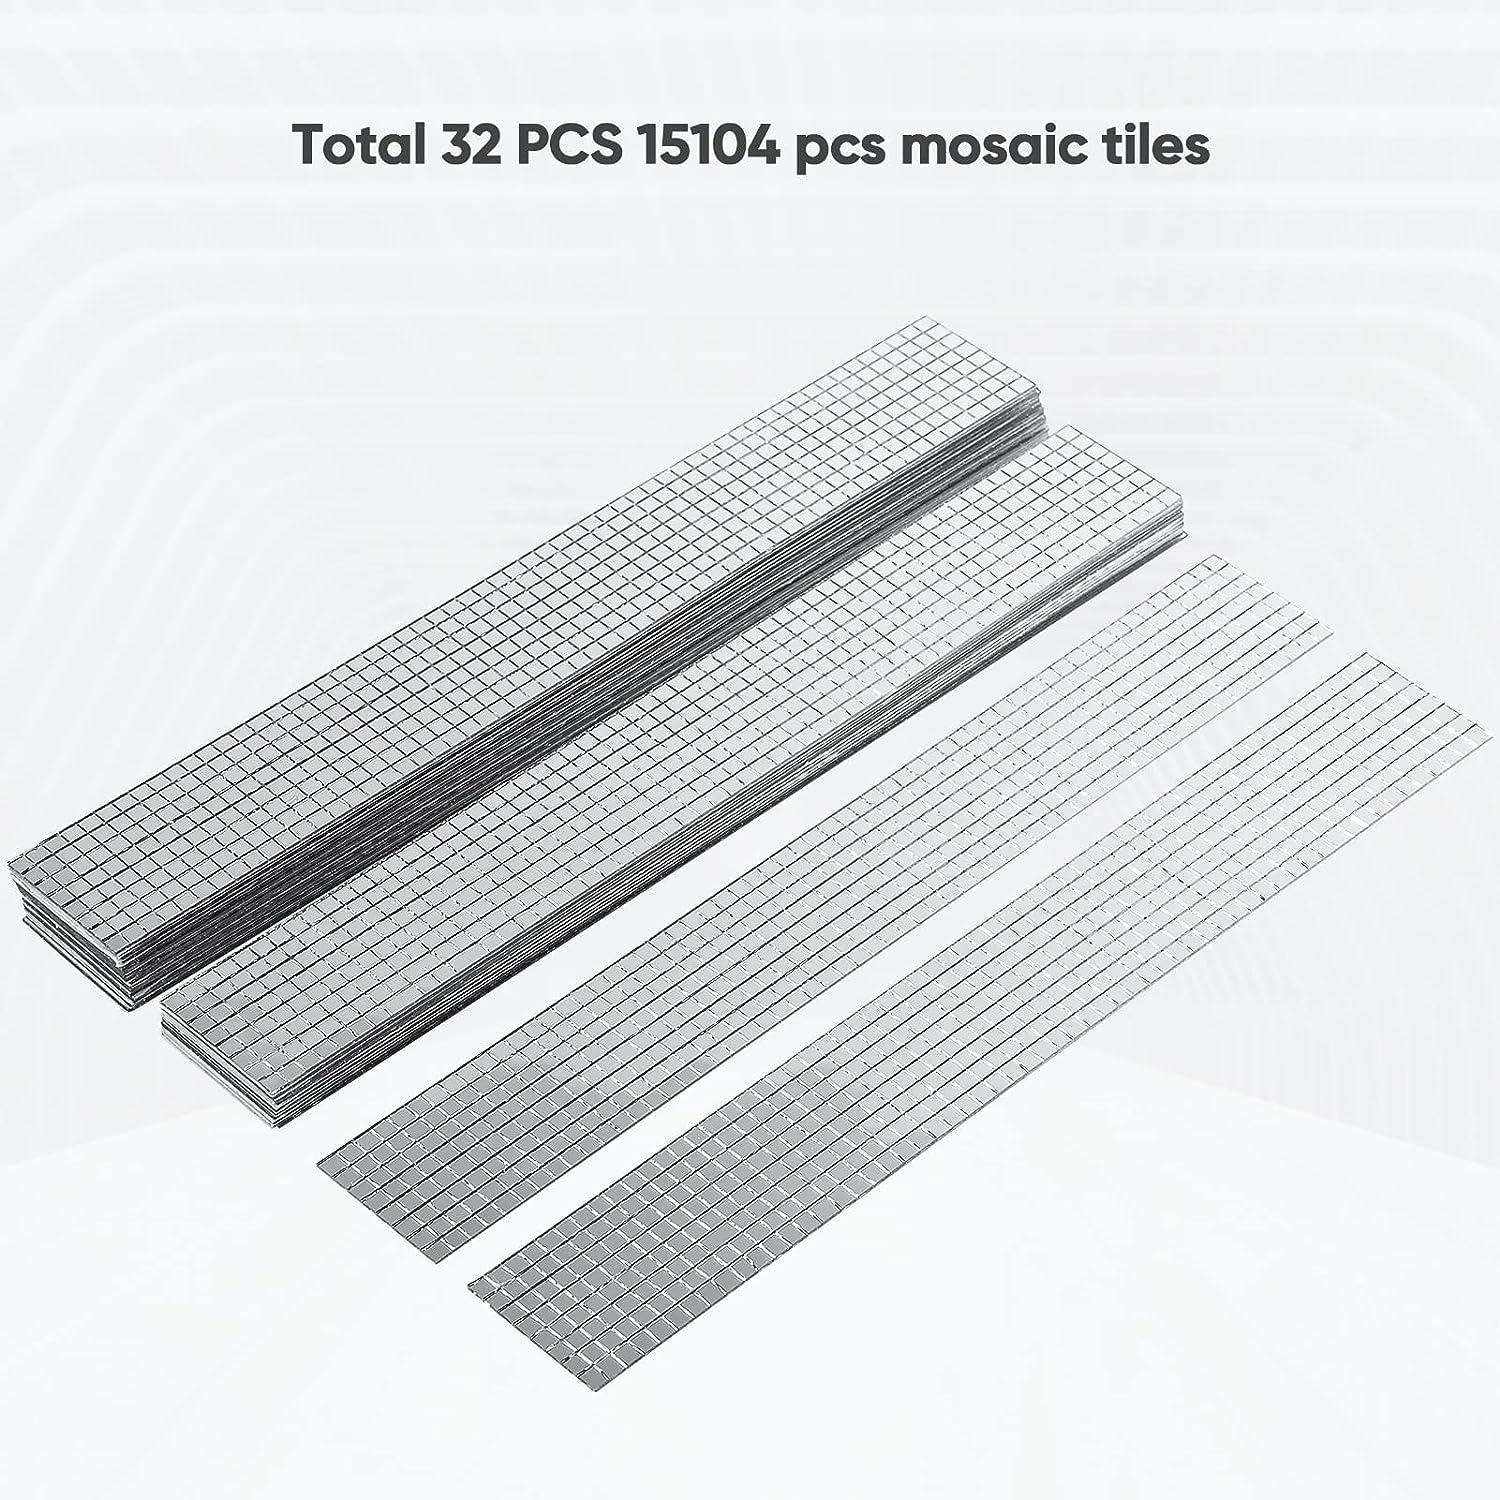 PP OPOUNT 2160 PCS Disco Ball Tiles, Self-Adhesive Mirror Tiles